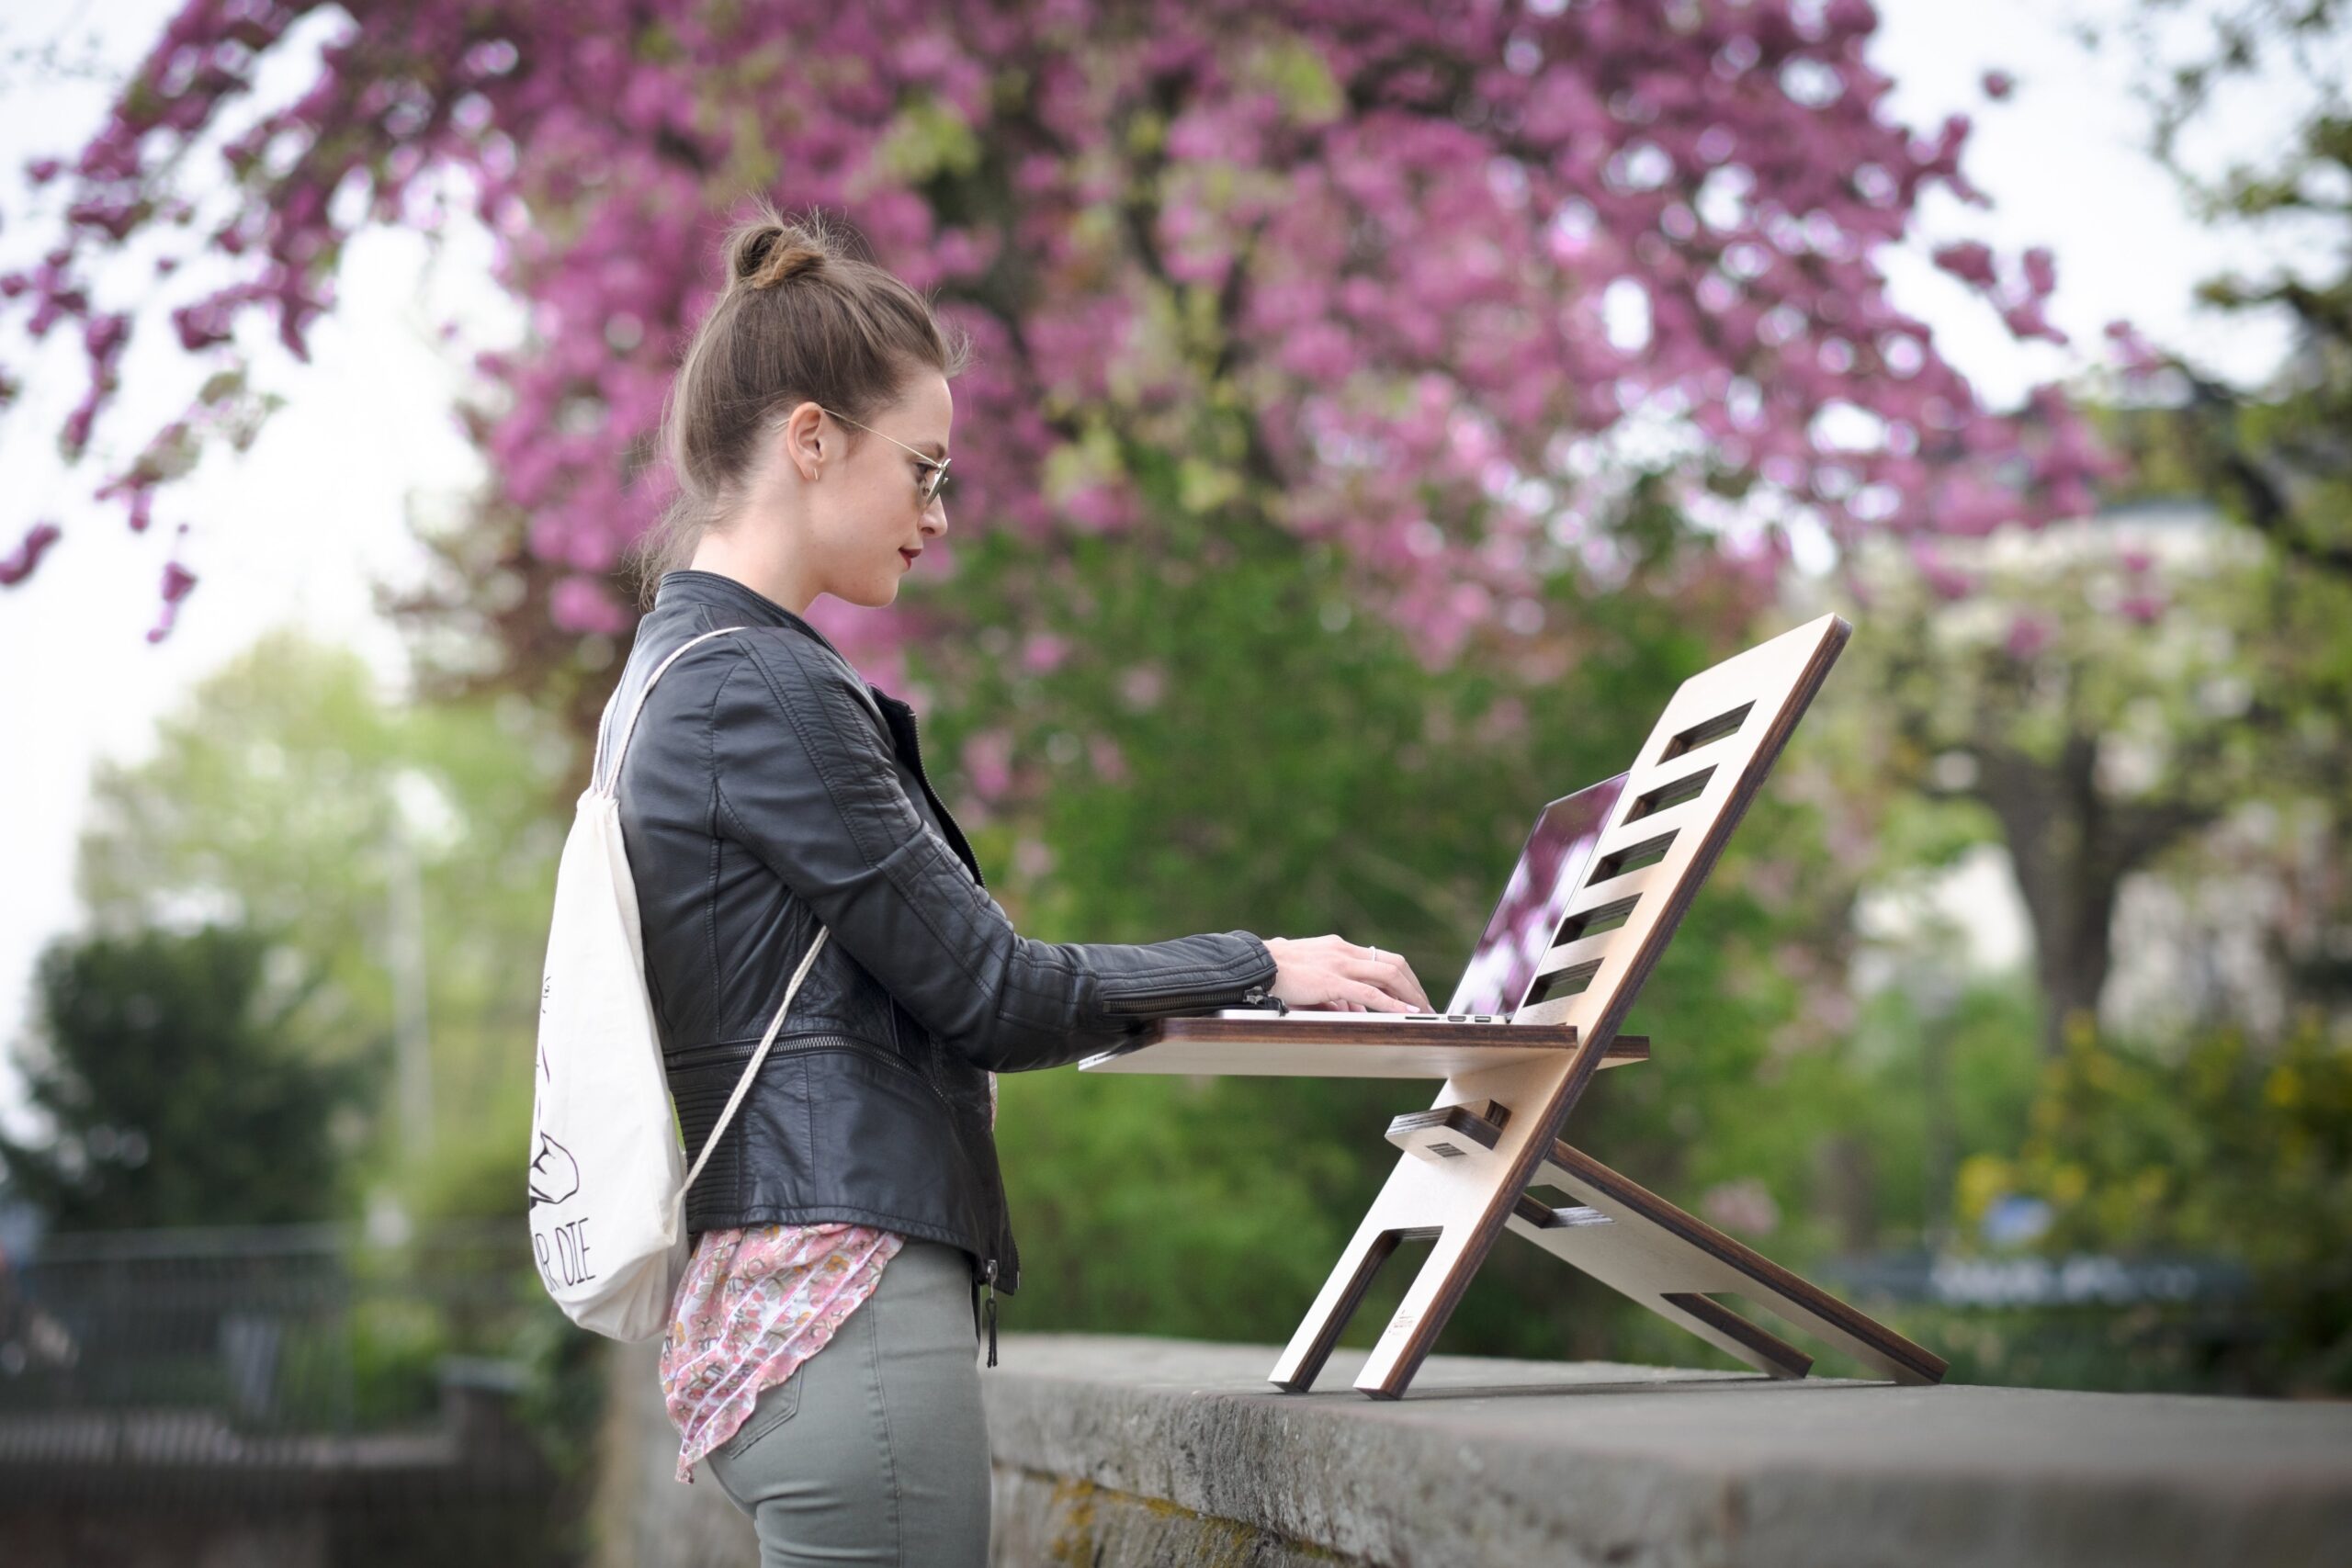 woman working outside on laptop